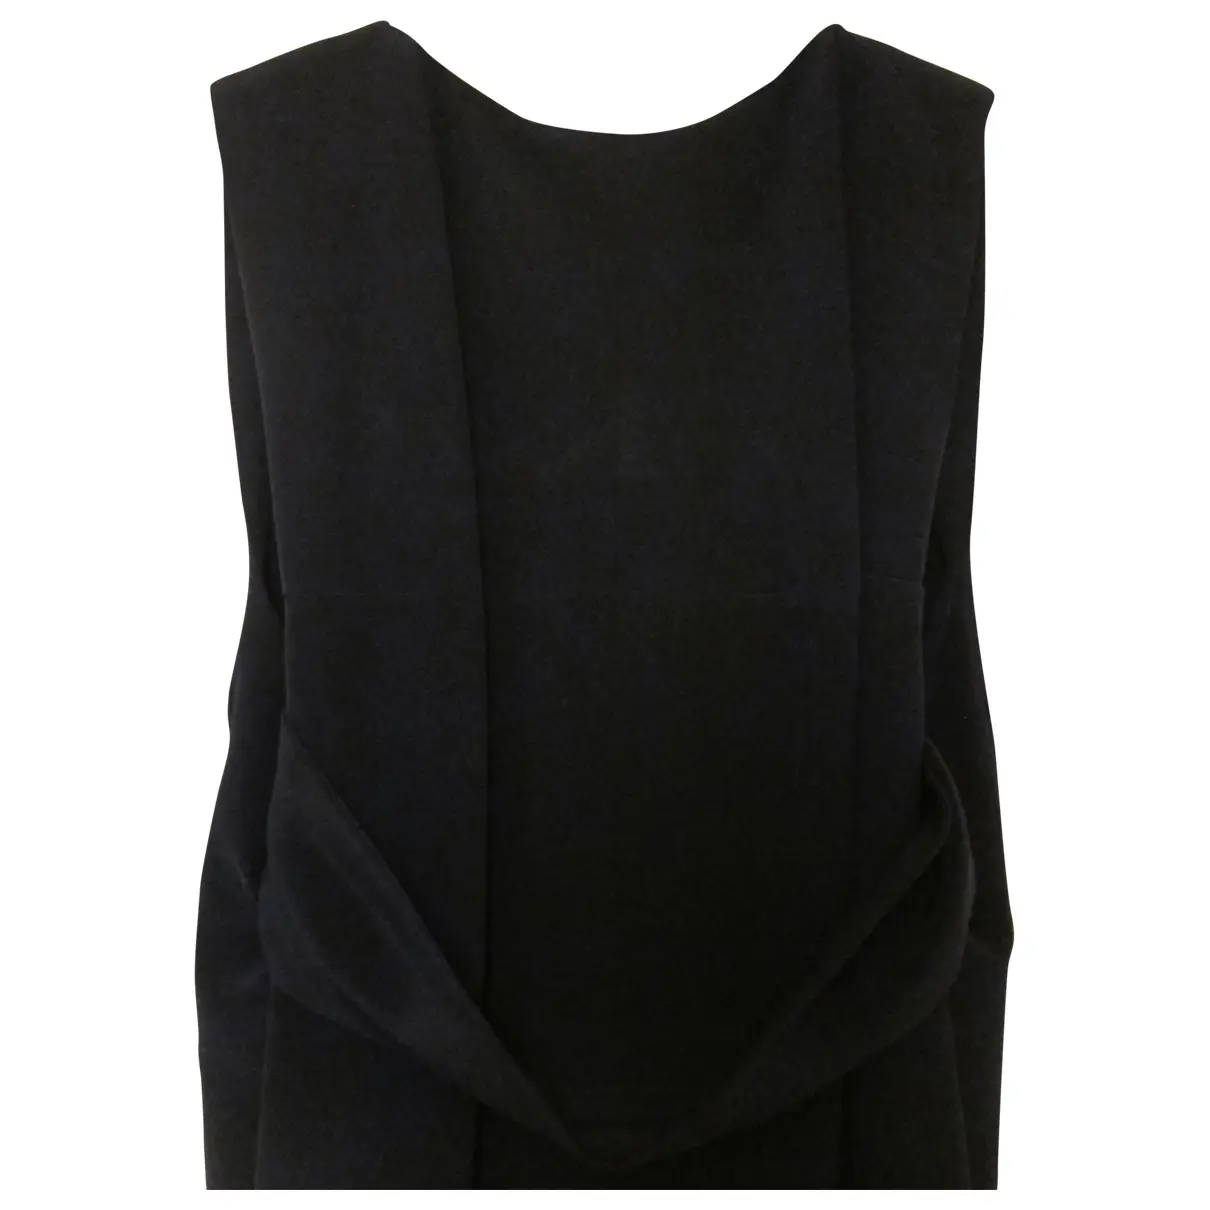 Buy Balenciaga Black Dress online